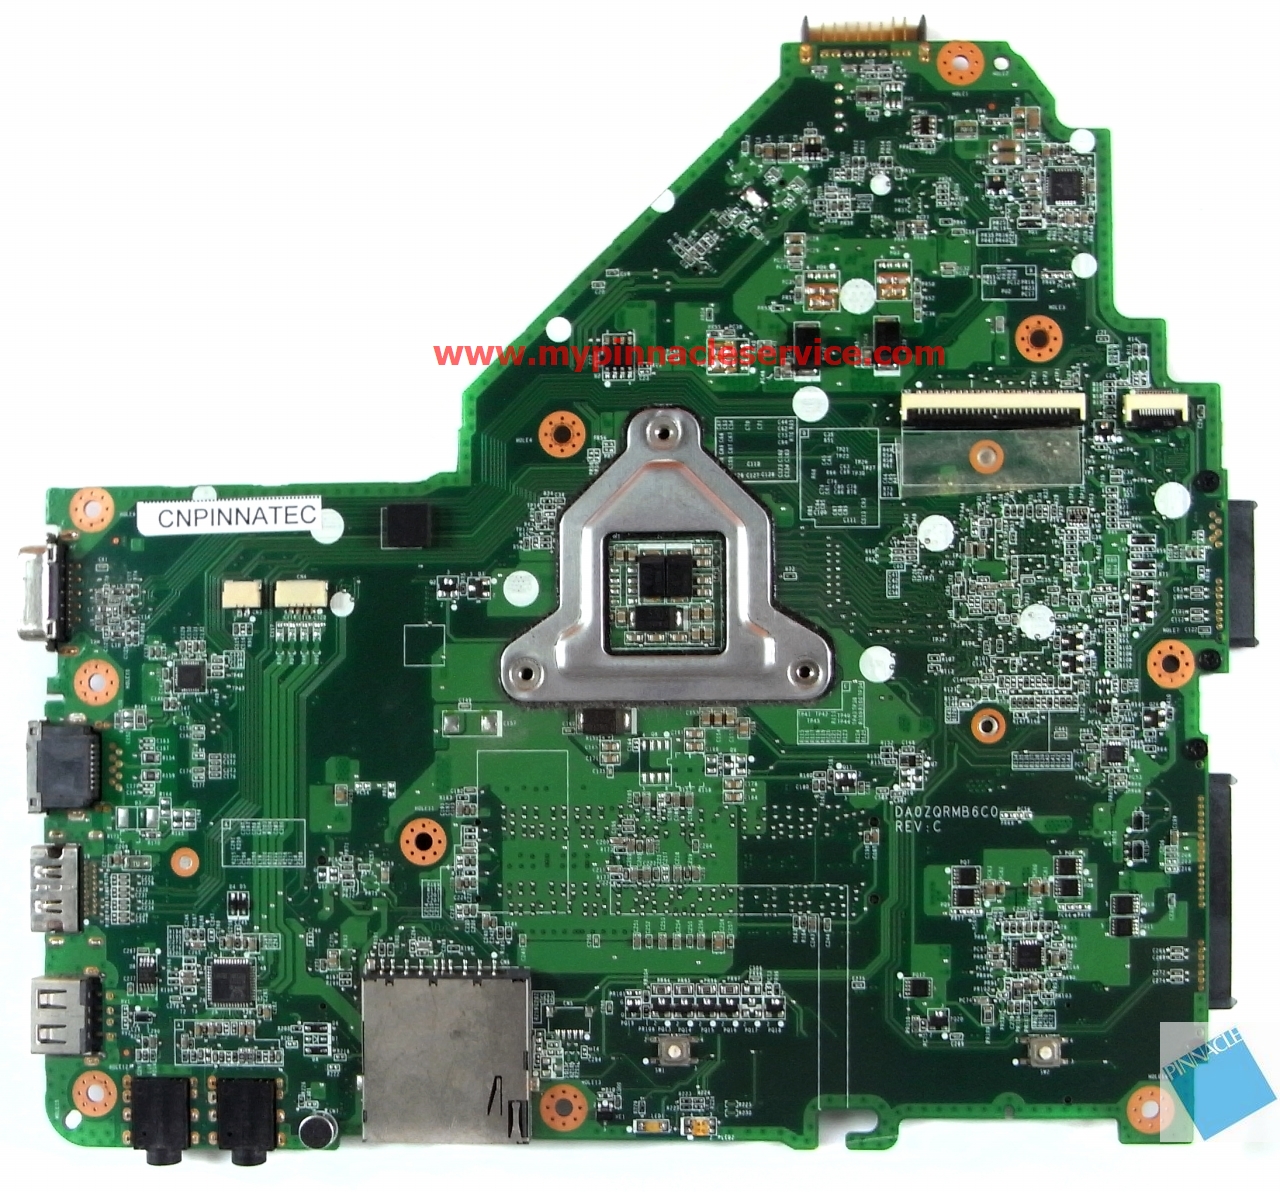 mbrr406001-motherboard-for-acer-aspire-4349-4749-da0zqrmb6c0-zqr-rimg0017.jpg